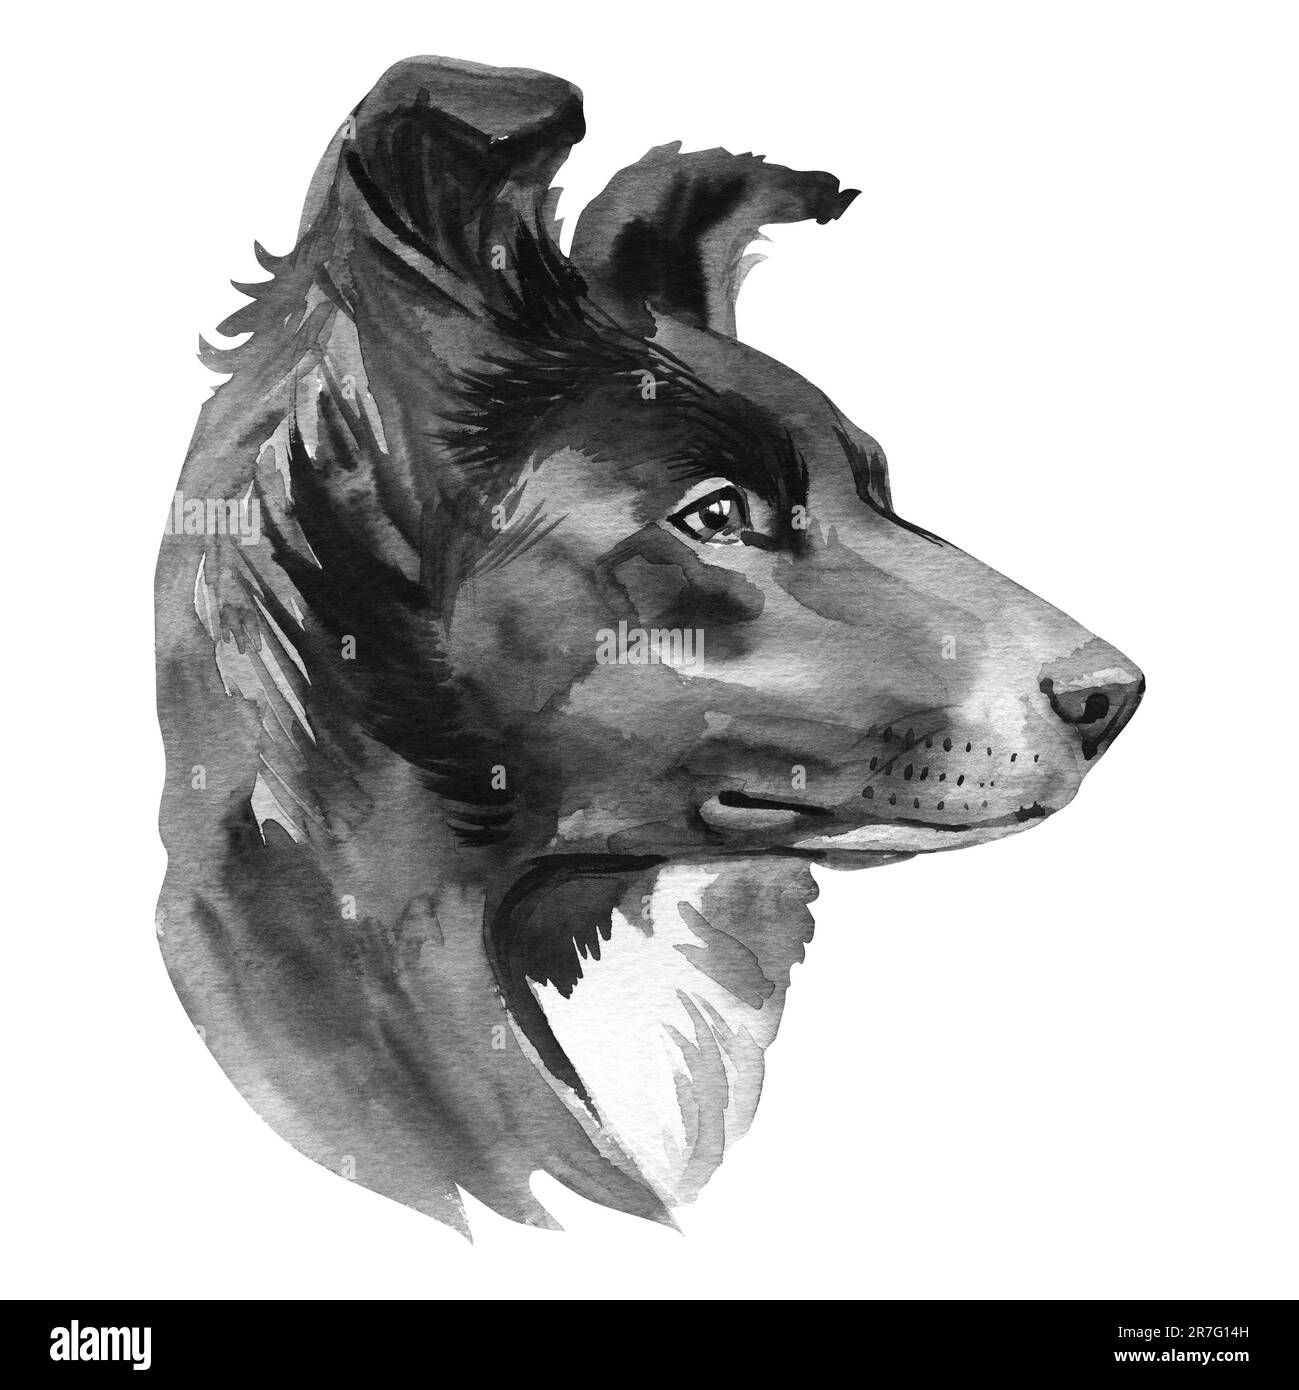 Border Collie. Porträthund. Handgezeichnete Aquarell-Illustration. Stockfoto